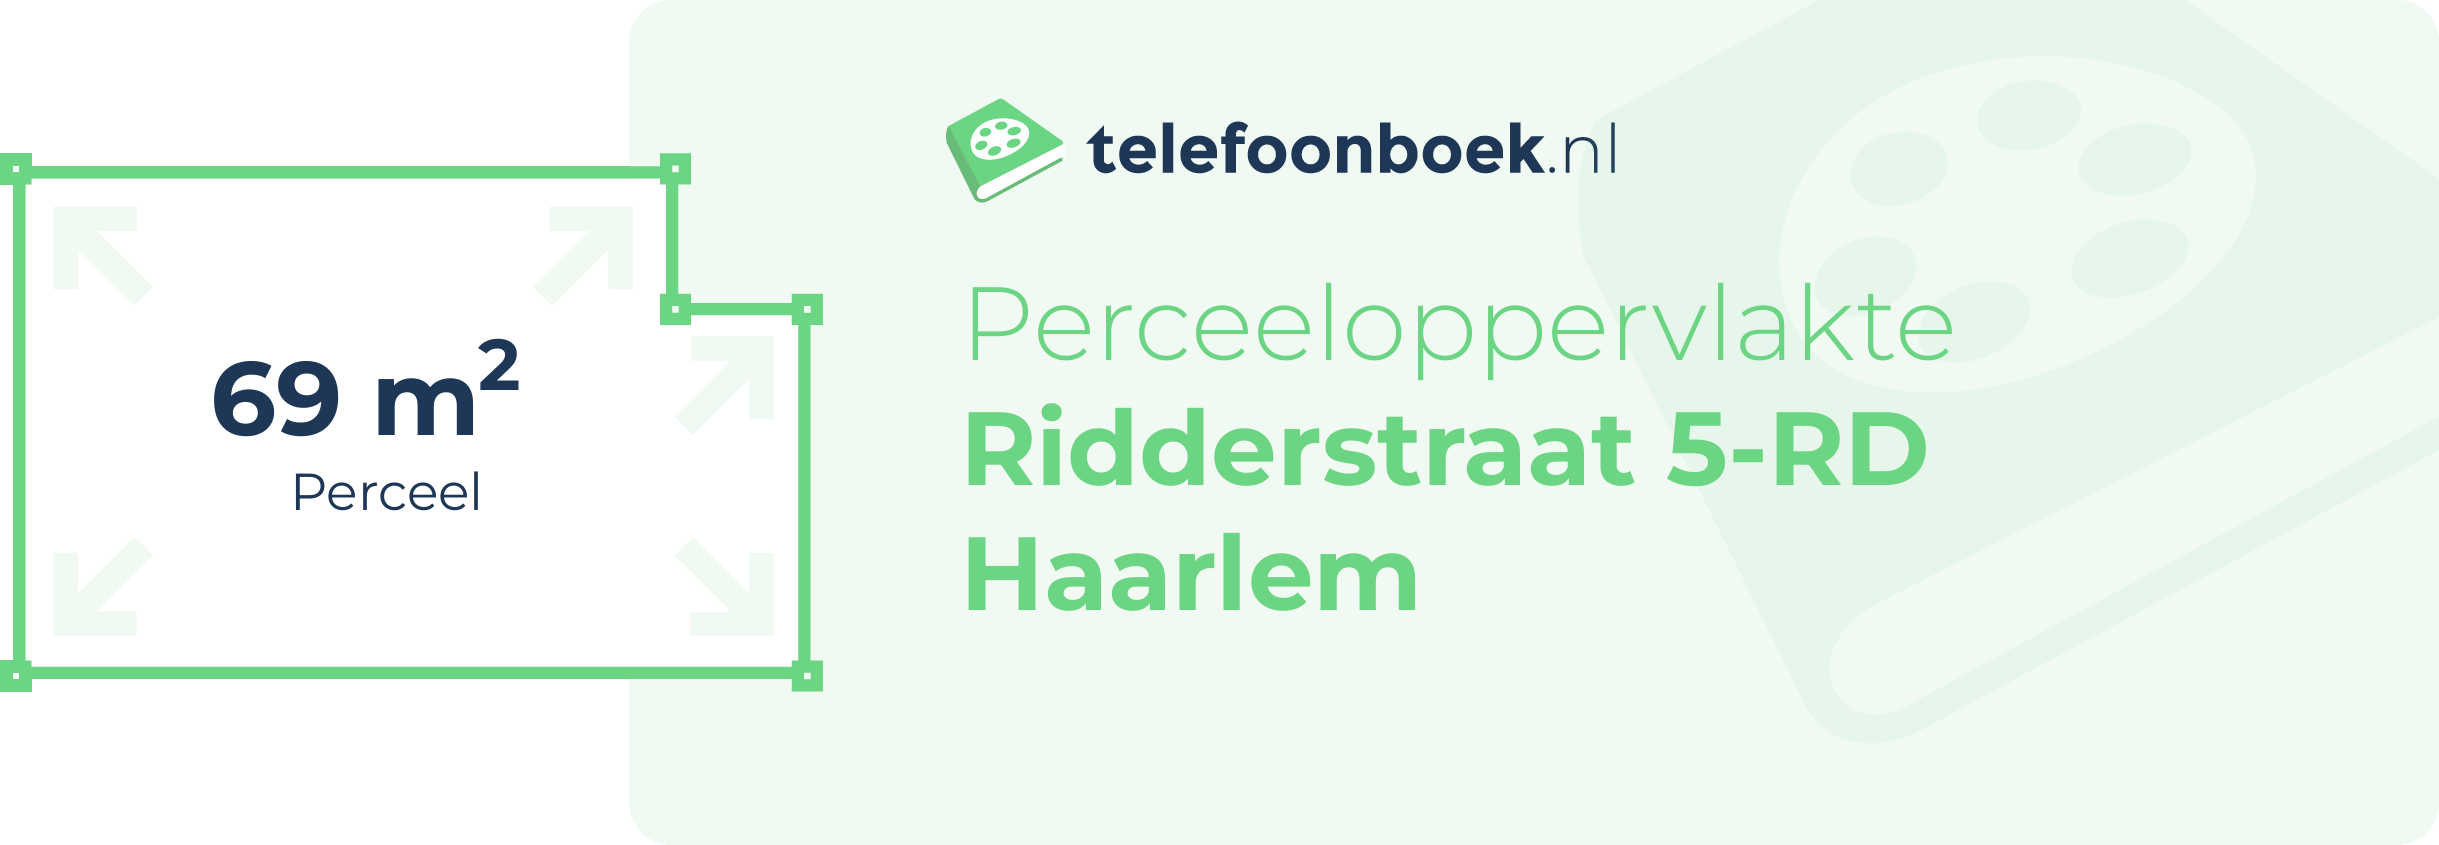 Perceeloppervlakte Ridderstraat 5-RD Haarlem